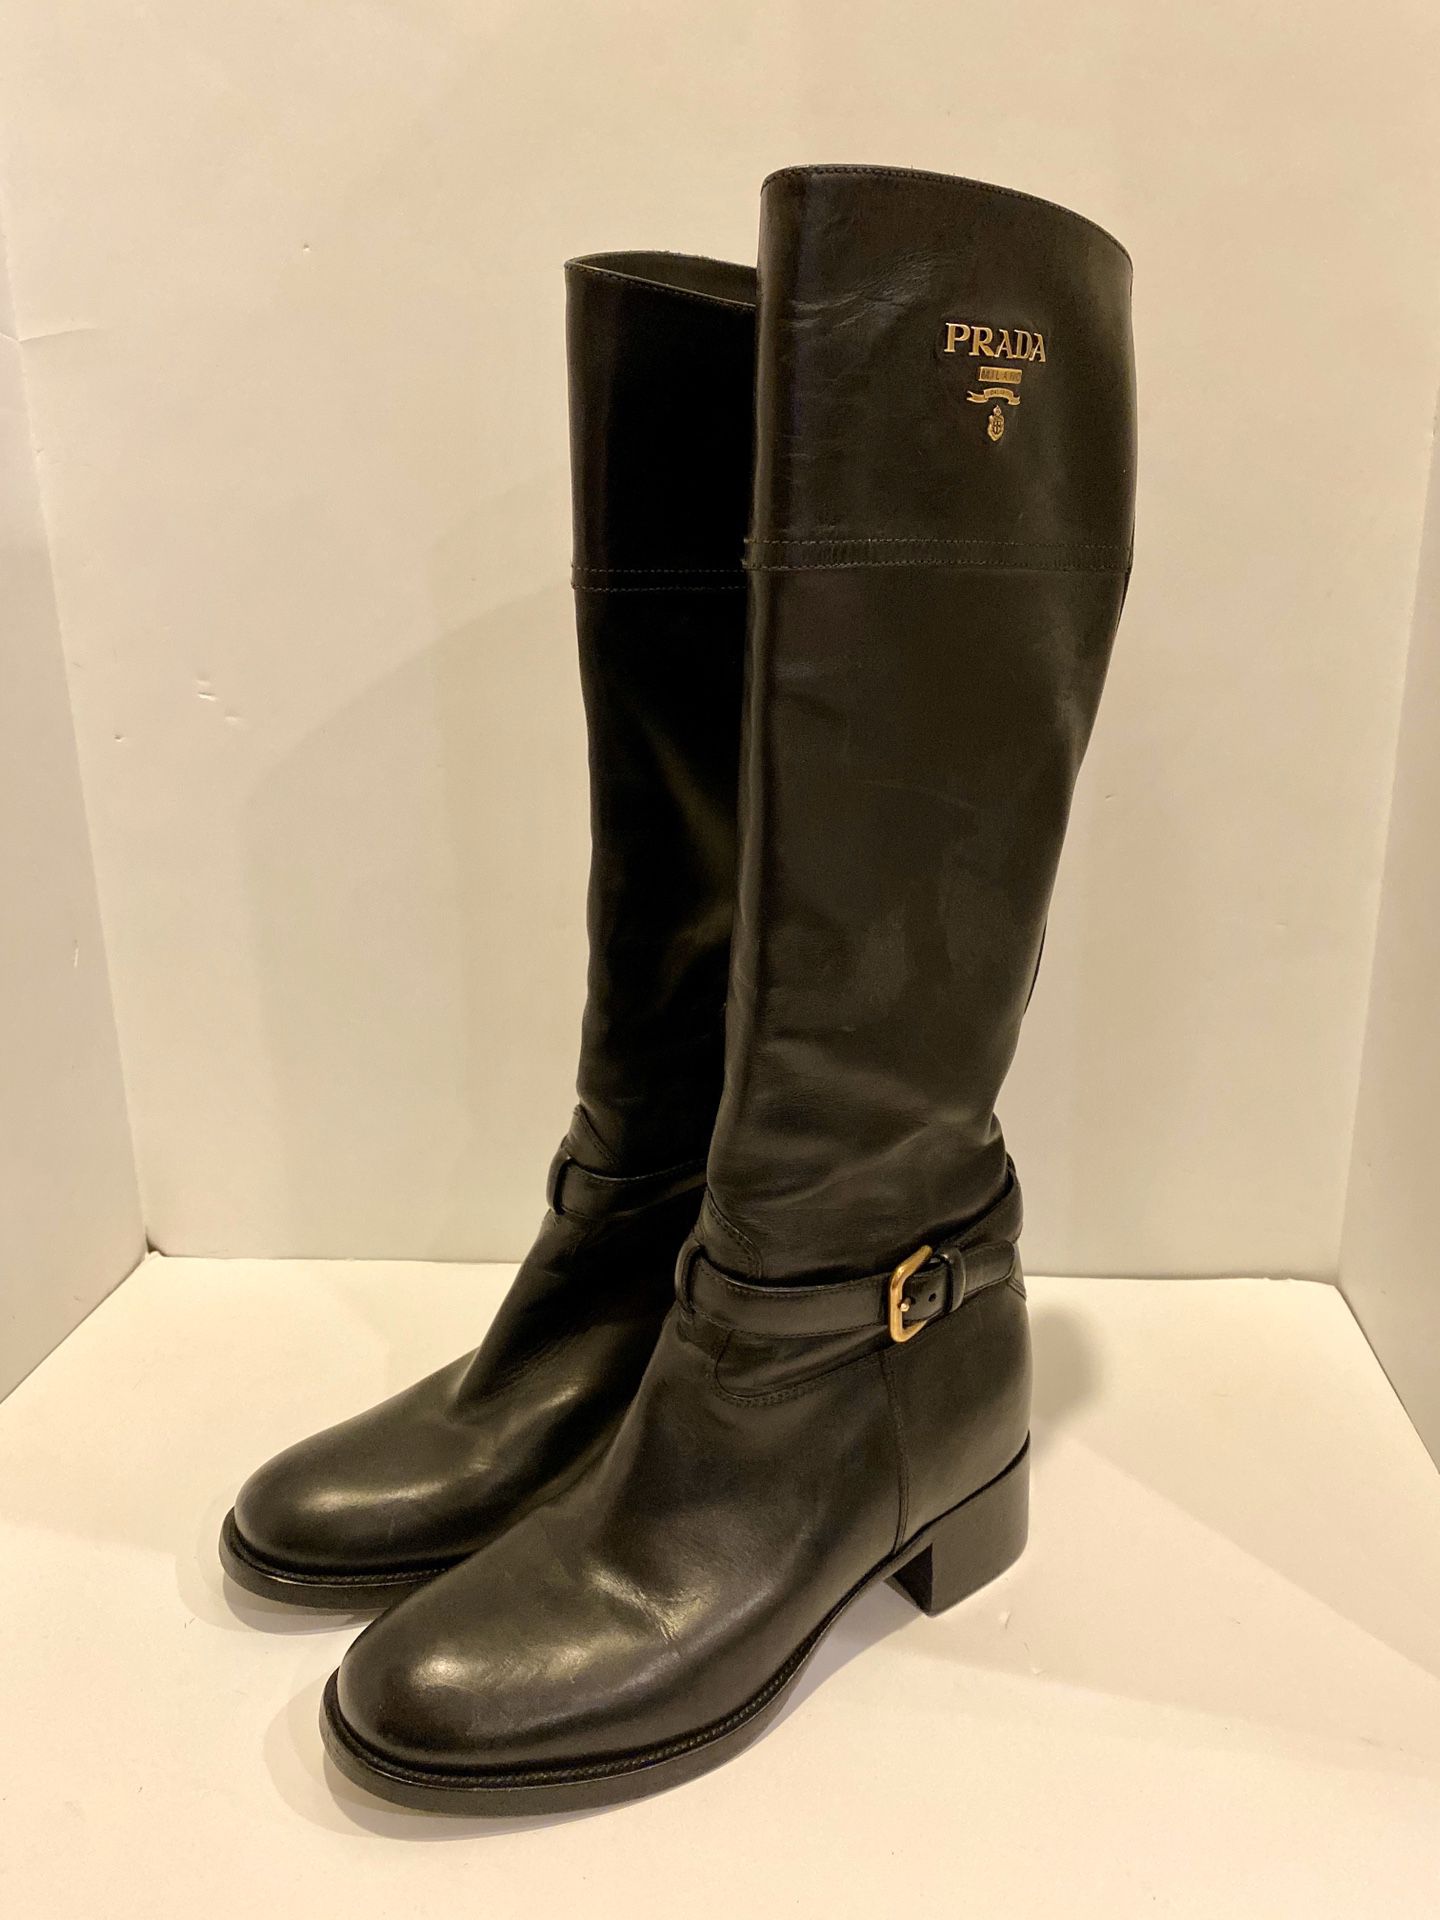 PRADA Women’s Black Leather Riding Boots Size 40 EU